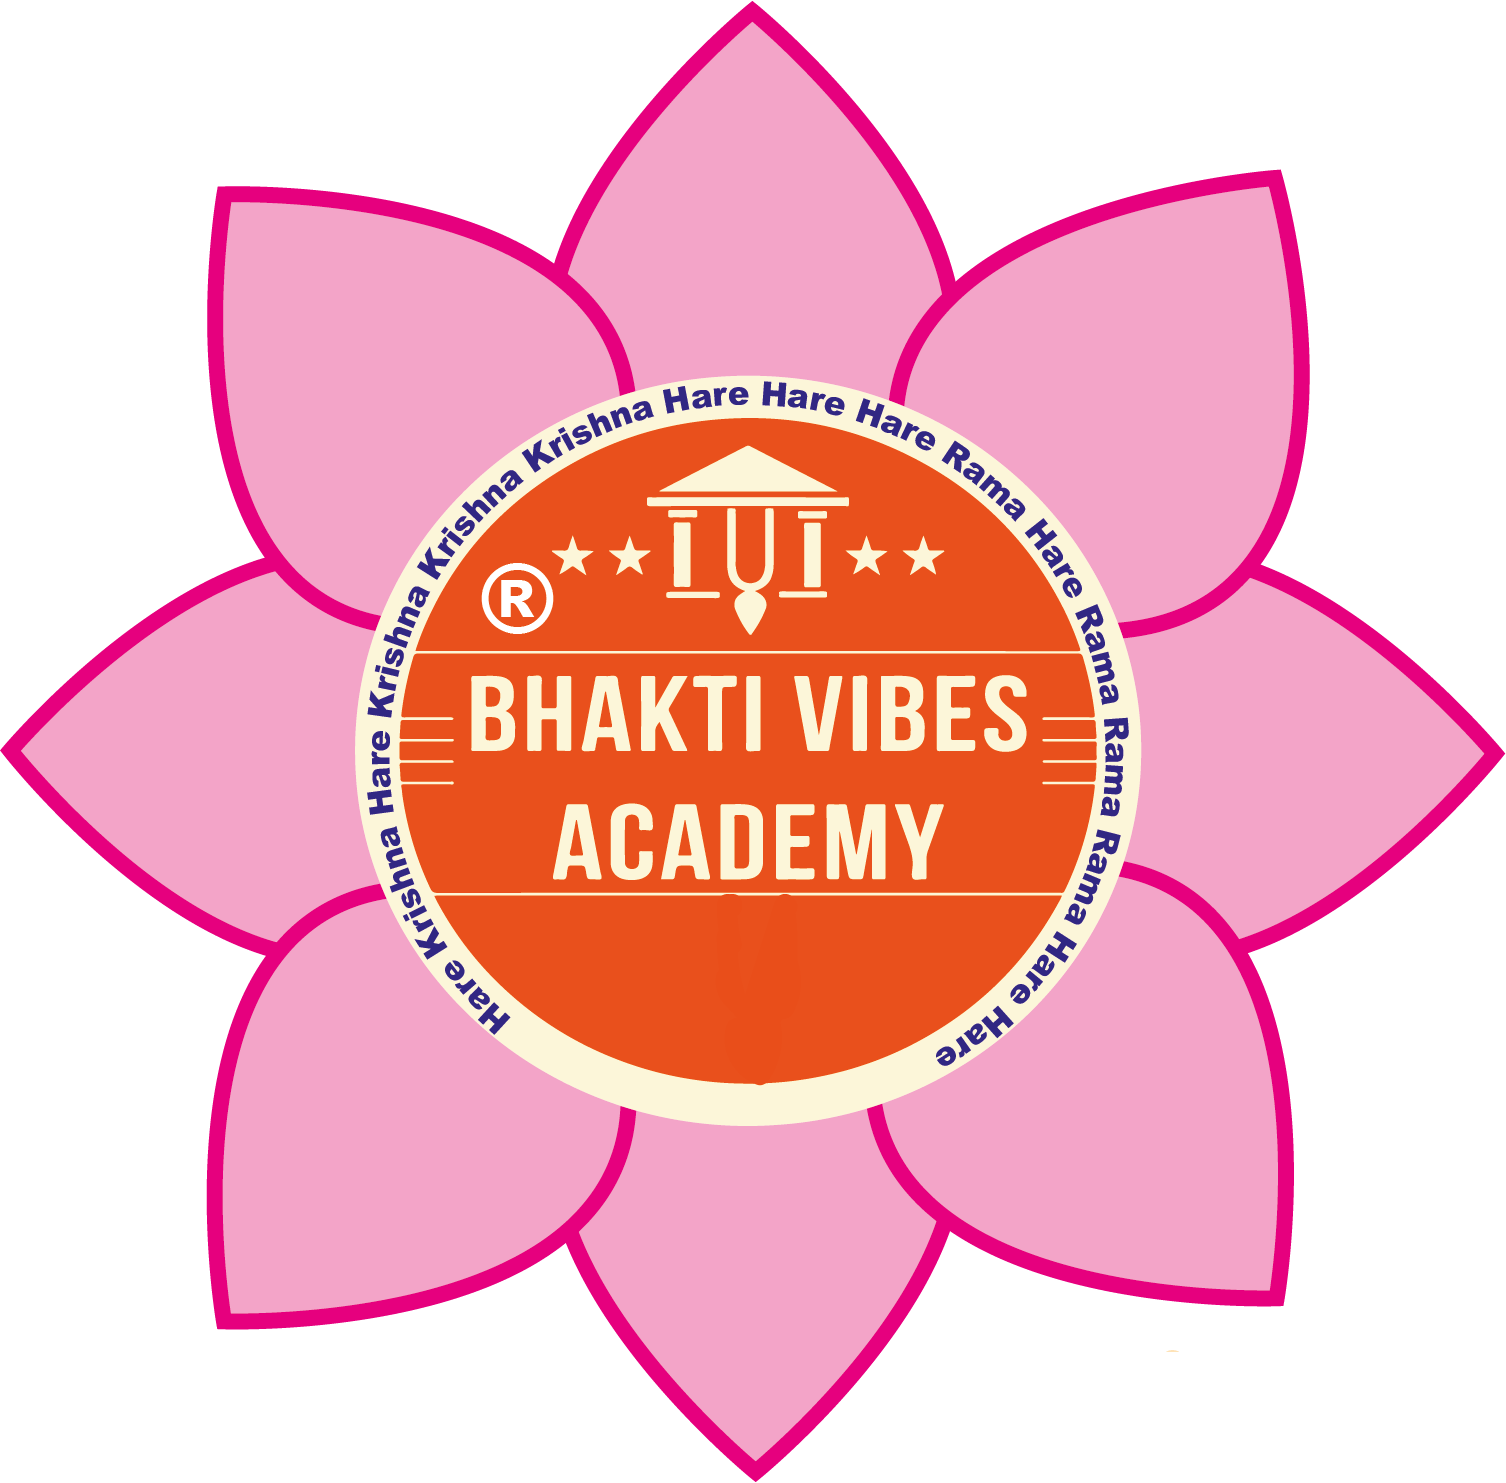 Bhakti Vibes Academy